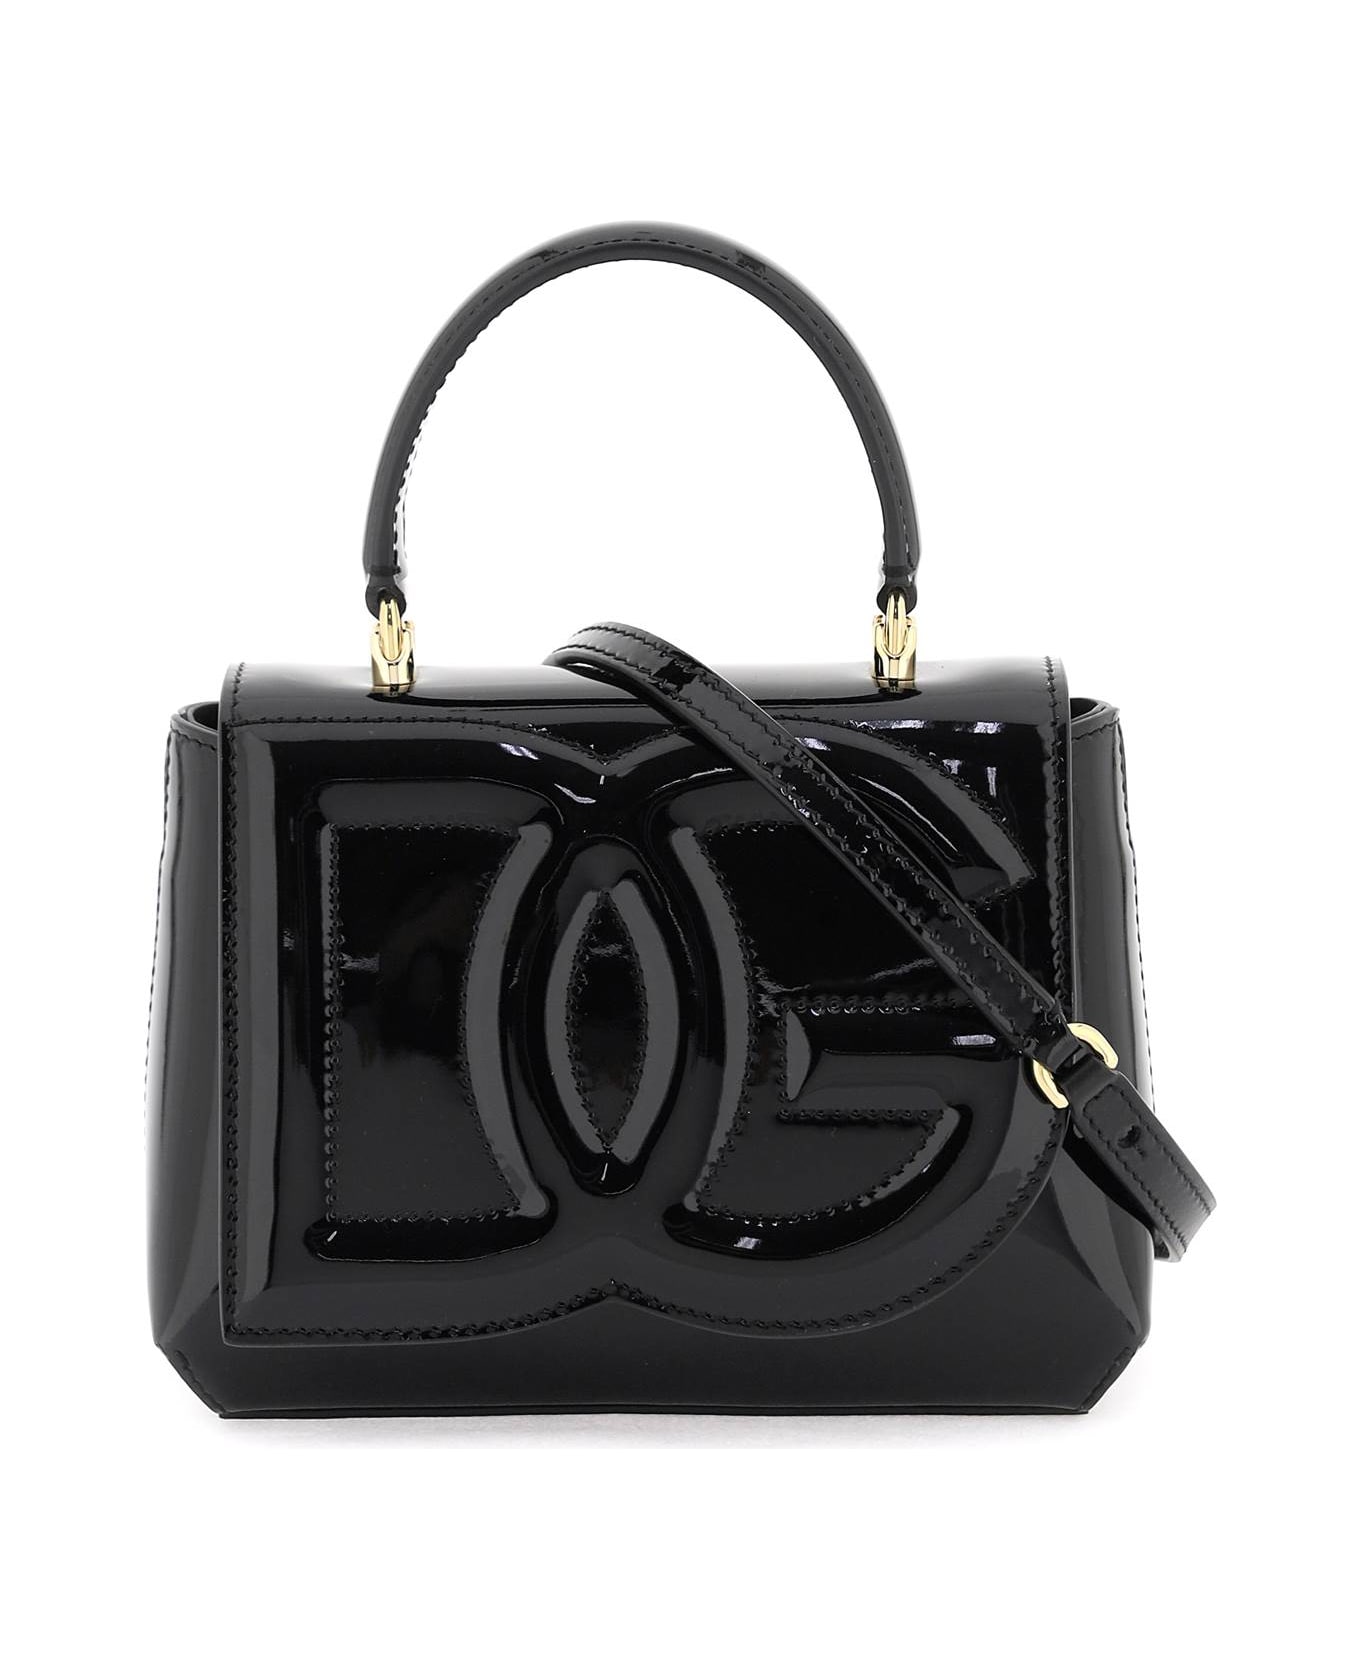 Dolce & Gabbana 'dg' Patent Leather Handbag - Black